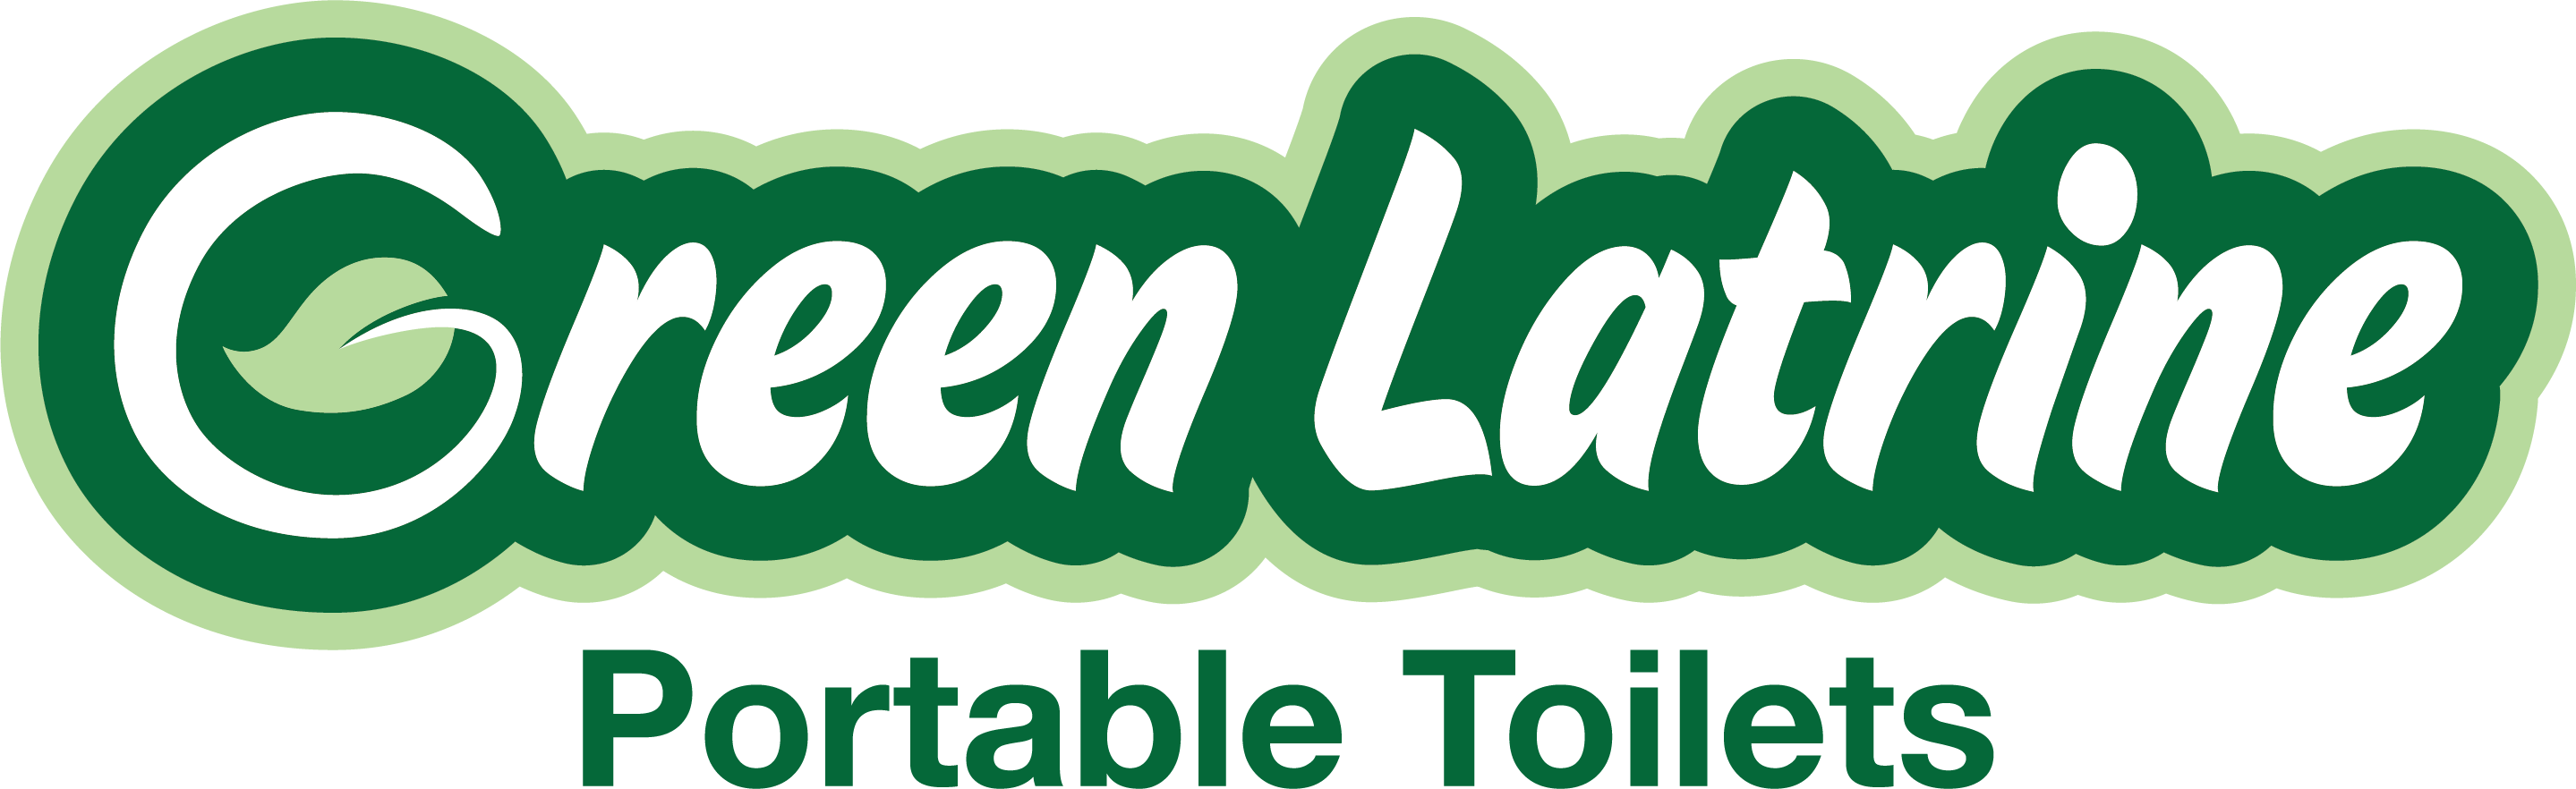 Green Latrine Environmentally Friendly Portable Toilets